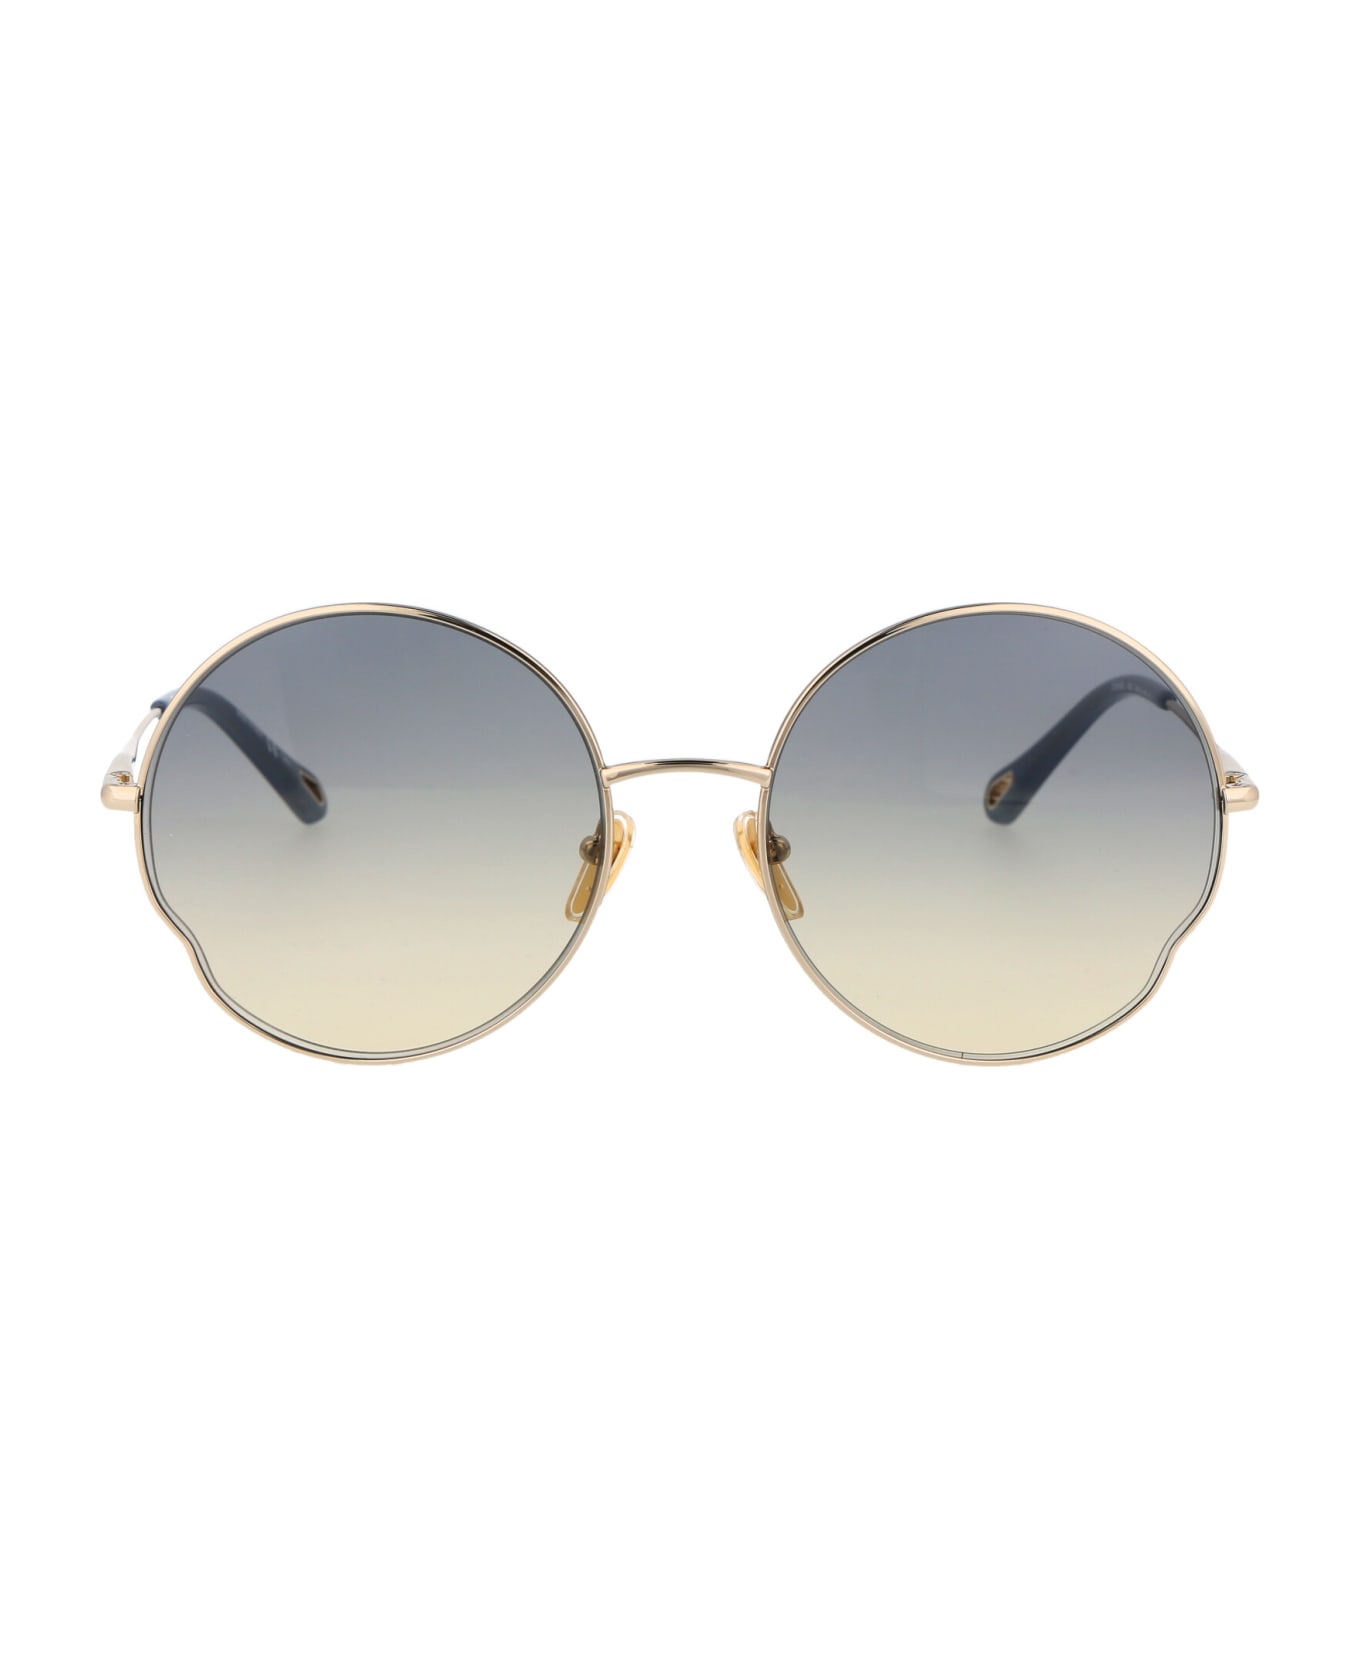 Chloé Eyewear Ch0095s Sunglasses - 002 GOLD GOLD GREY サングラス